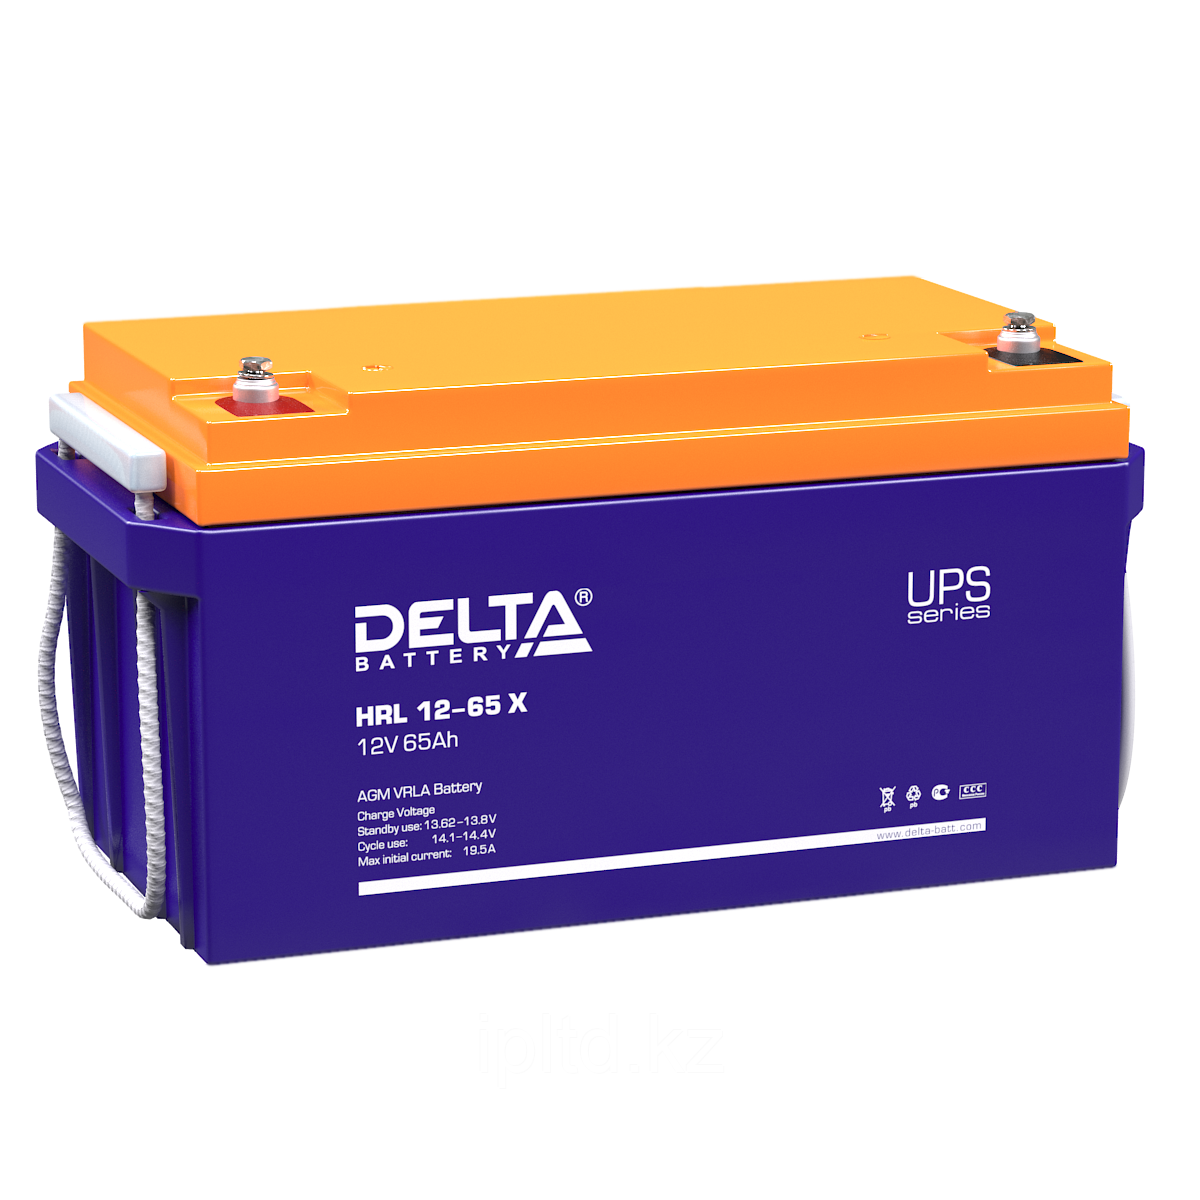 Delta аккумуляторная батарея HR12-65 (12V / 65Ah)